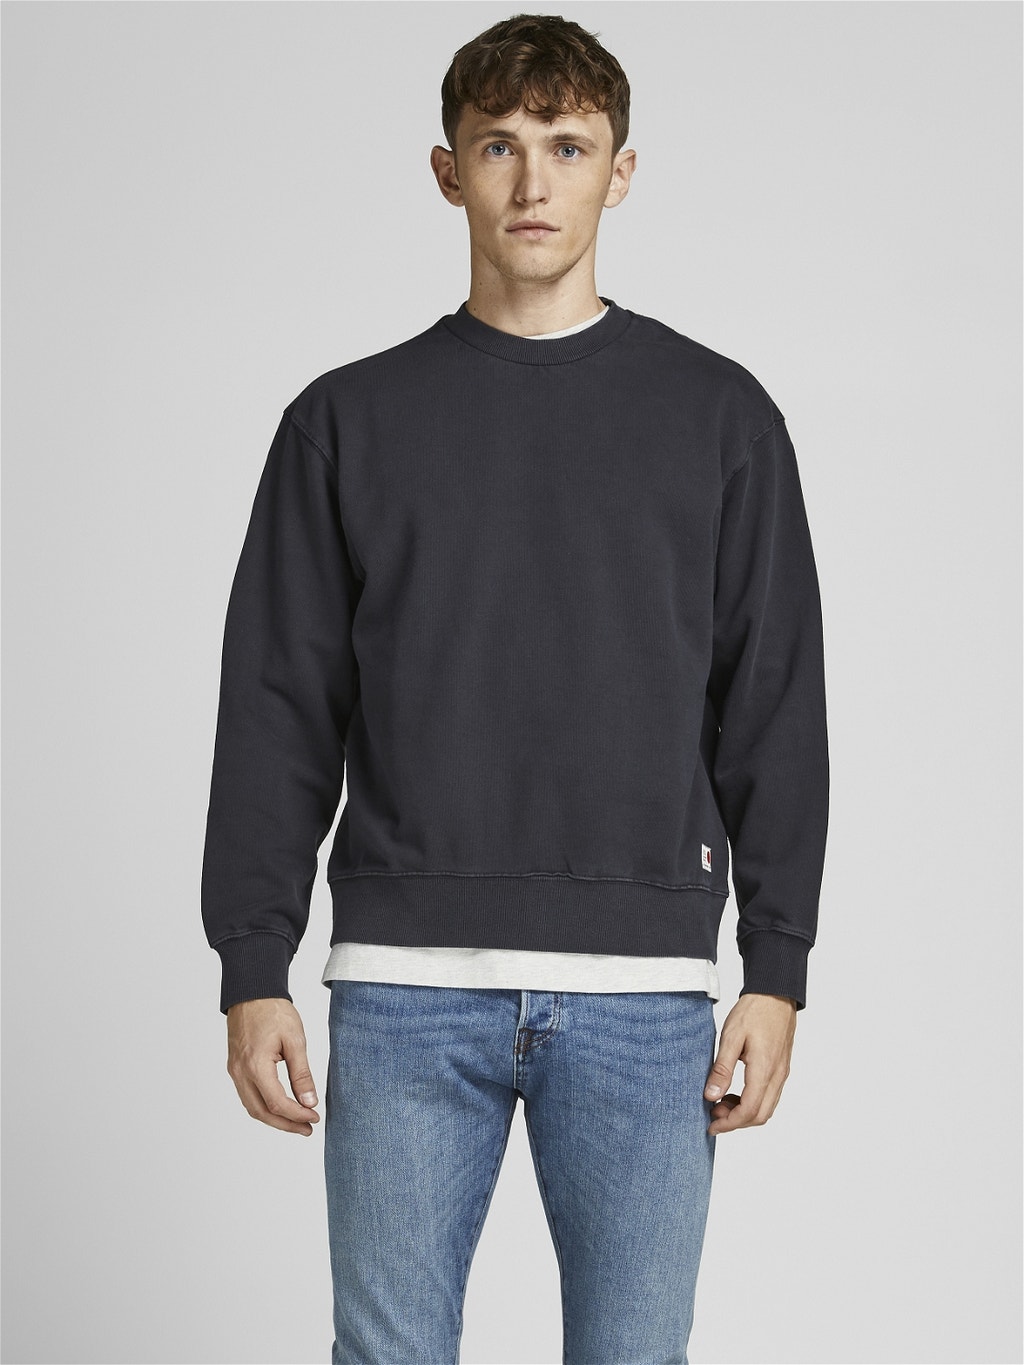 Oversized cotton Sweatshirt with 50% discount! |